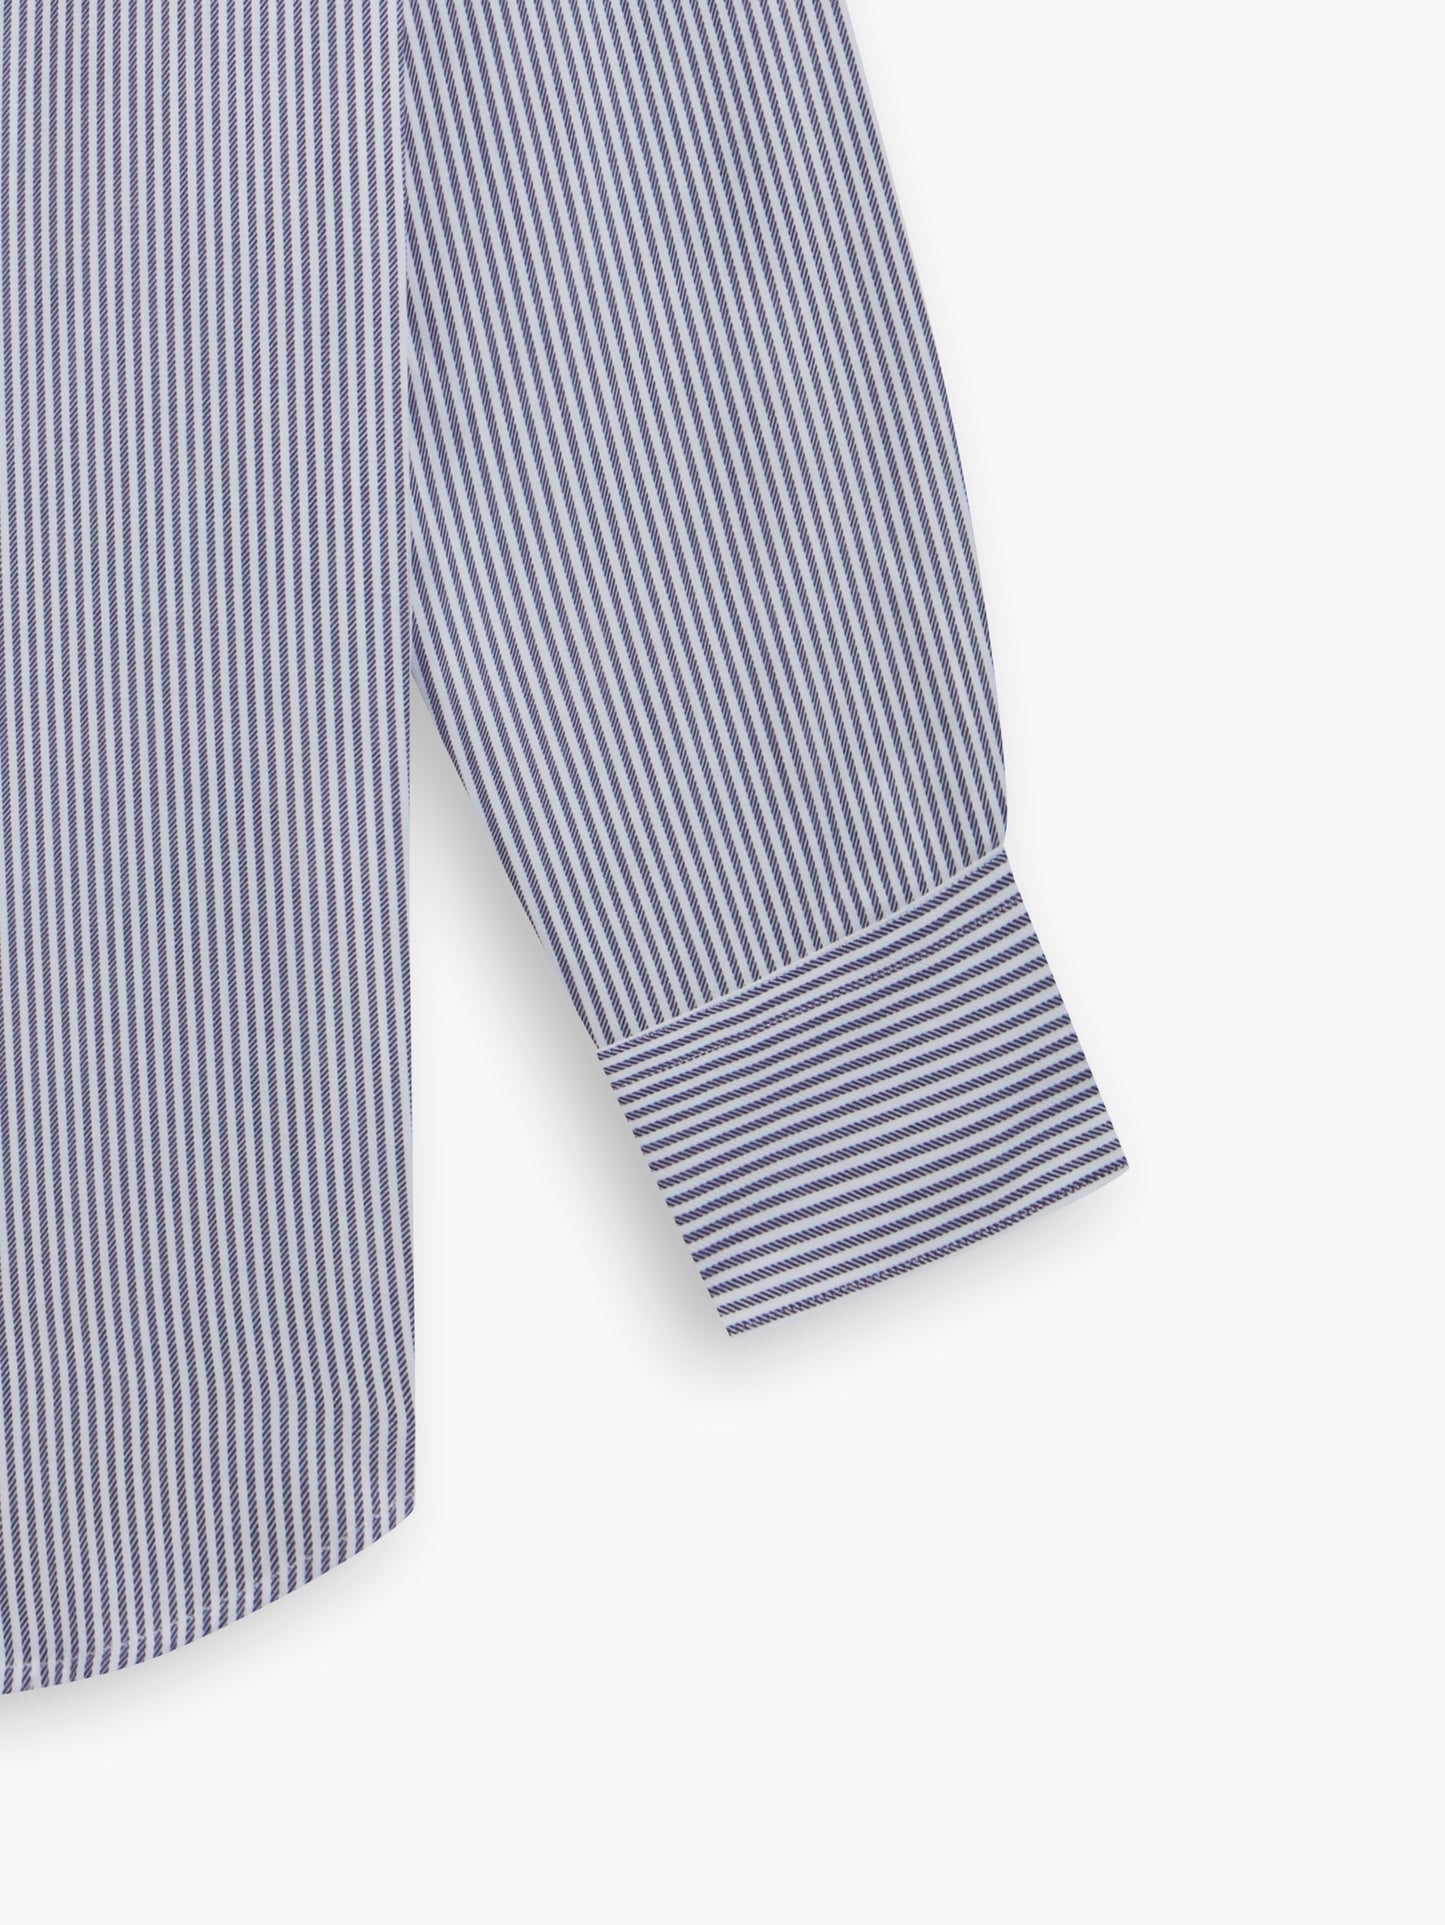 Navy Blue Dash Bengal Stripe Twill Fitted Single Cuff Classic Collar Shirt